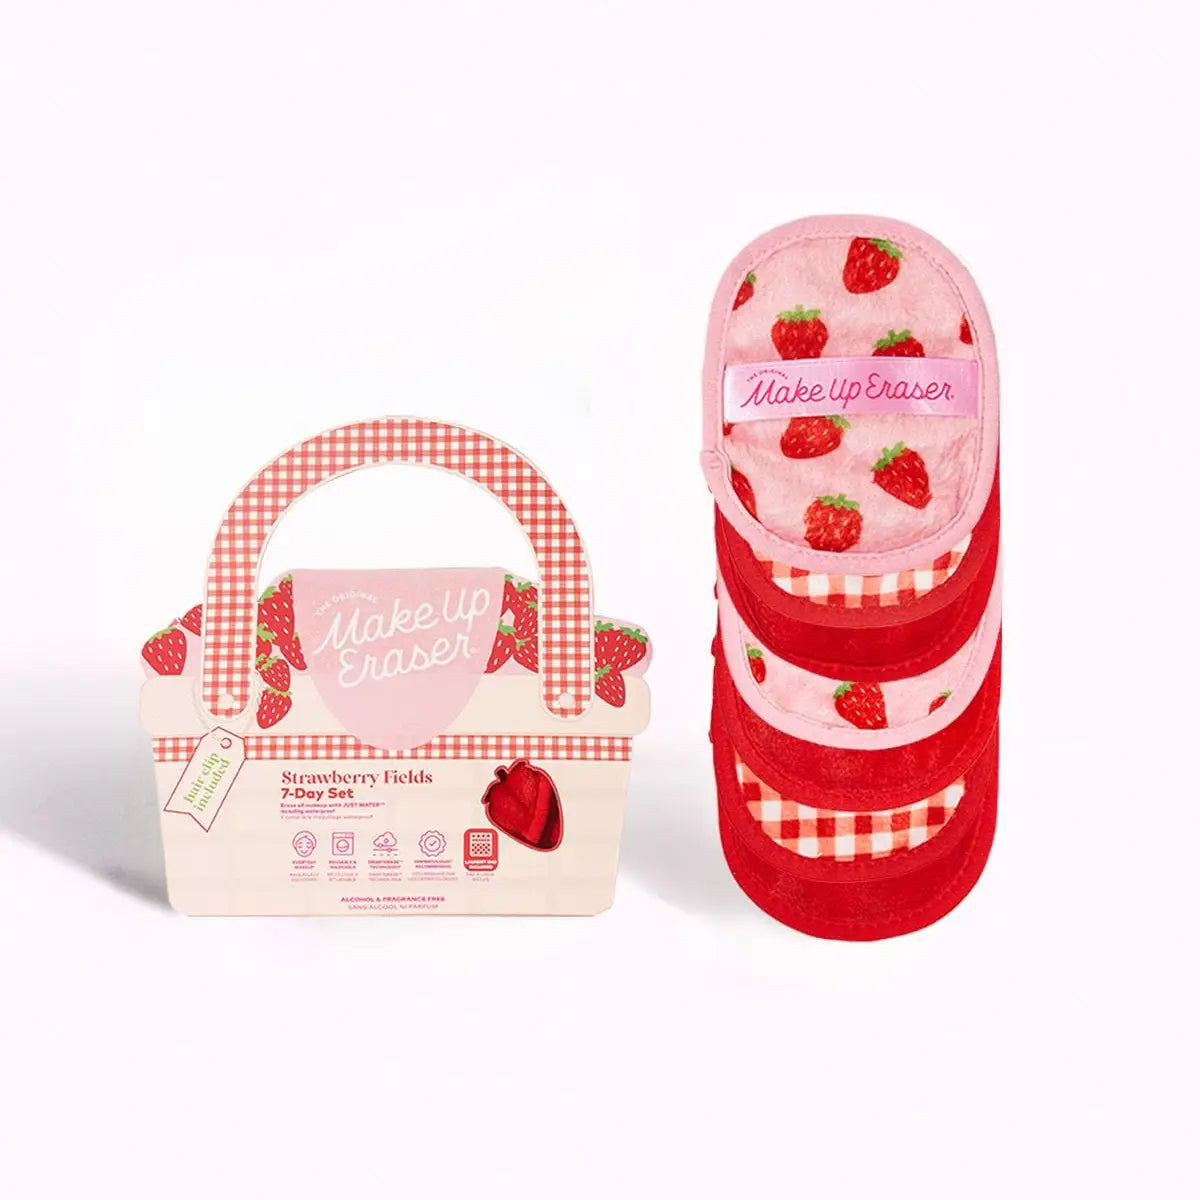 Strawberry Fields Makeup Eraser Set